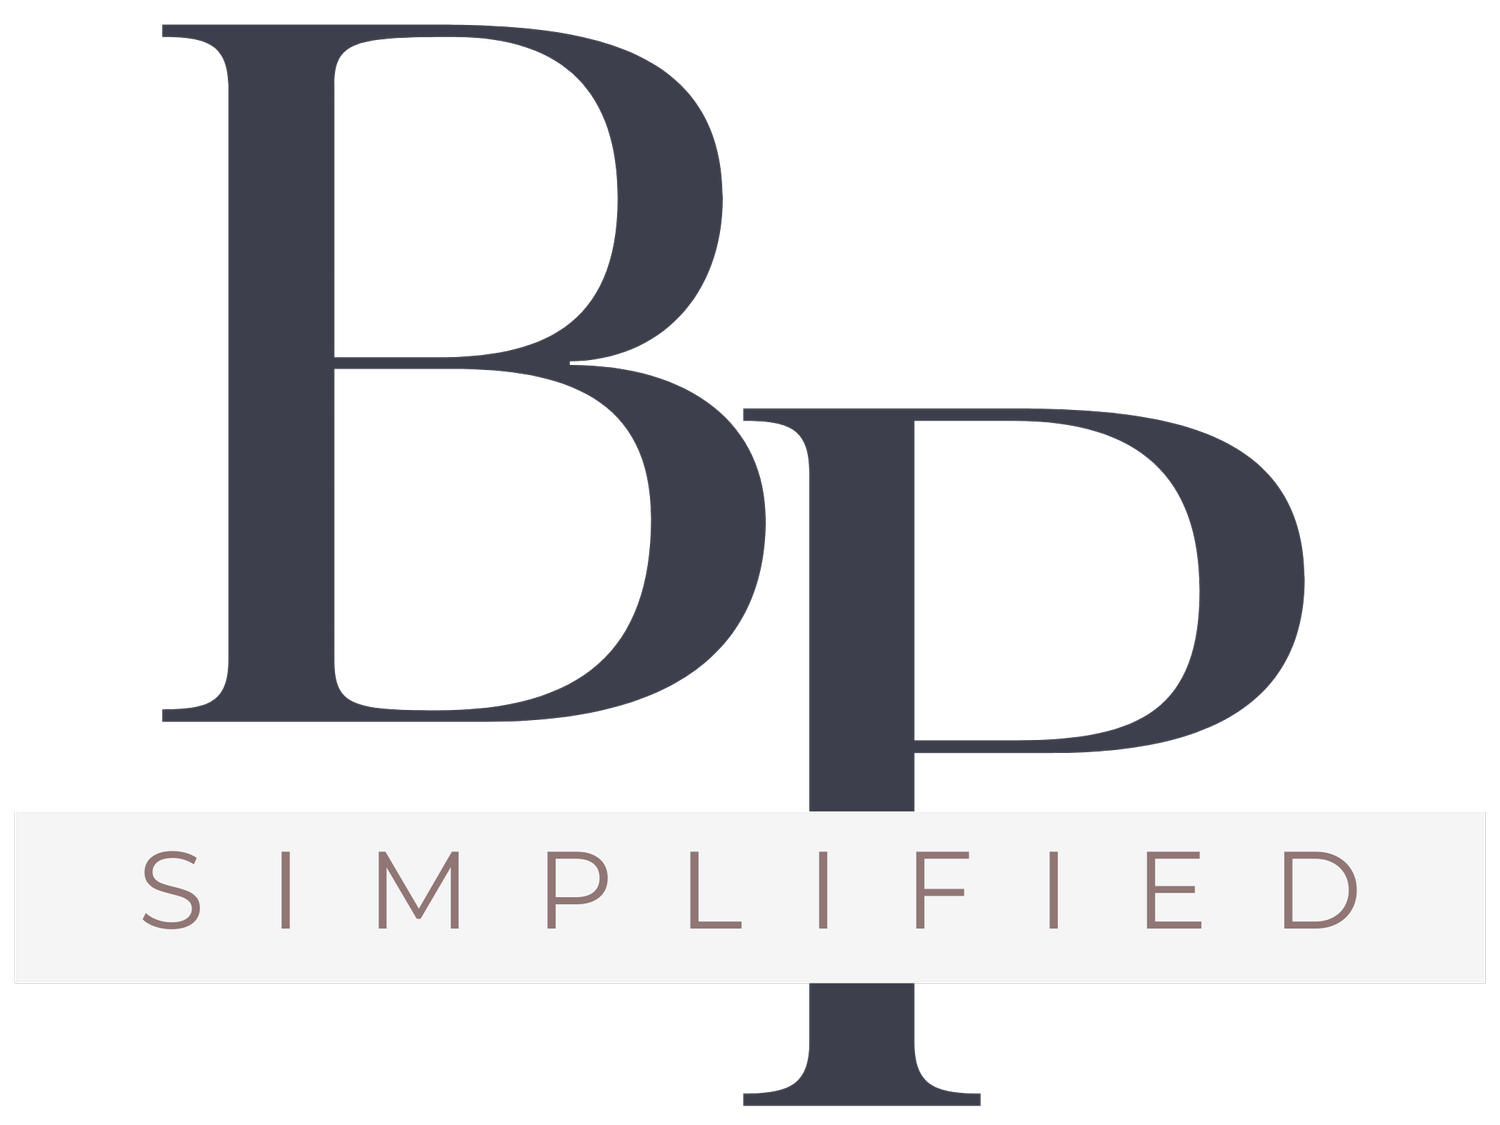 Brand Partner Simplified